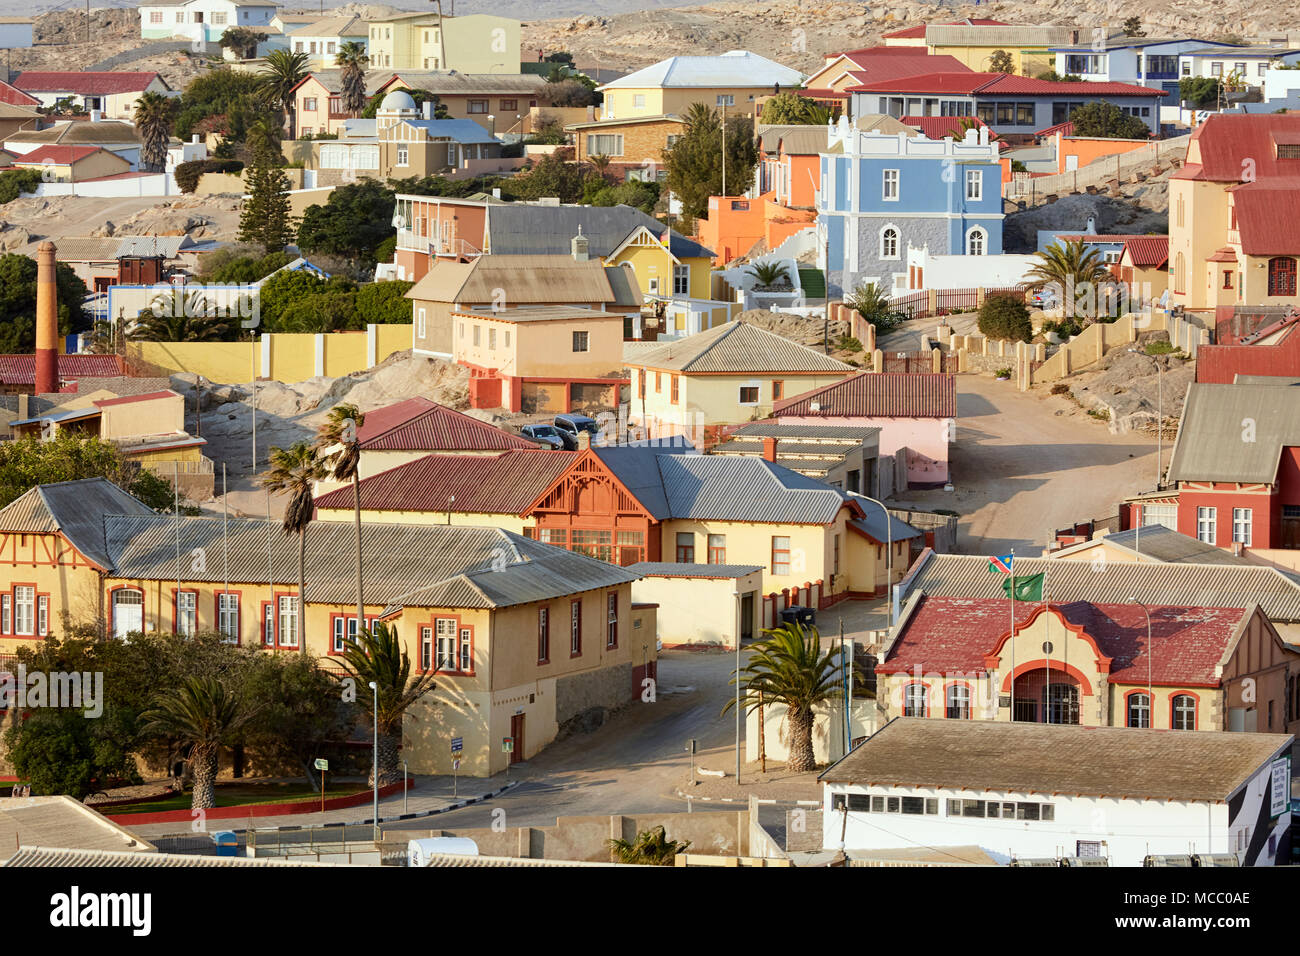 Vista aerea di Luderitz mostra case colorate in Namibia, Africa Foto Stock